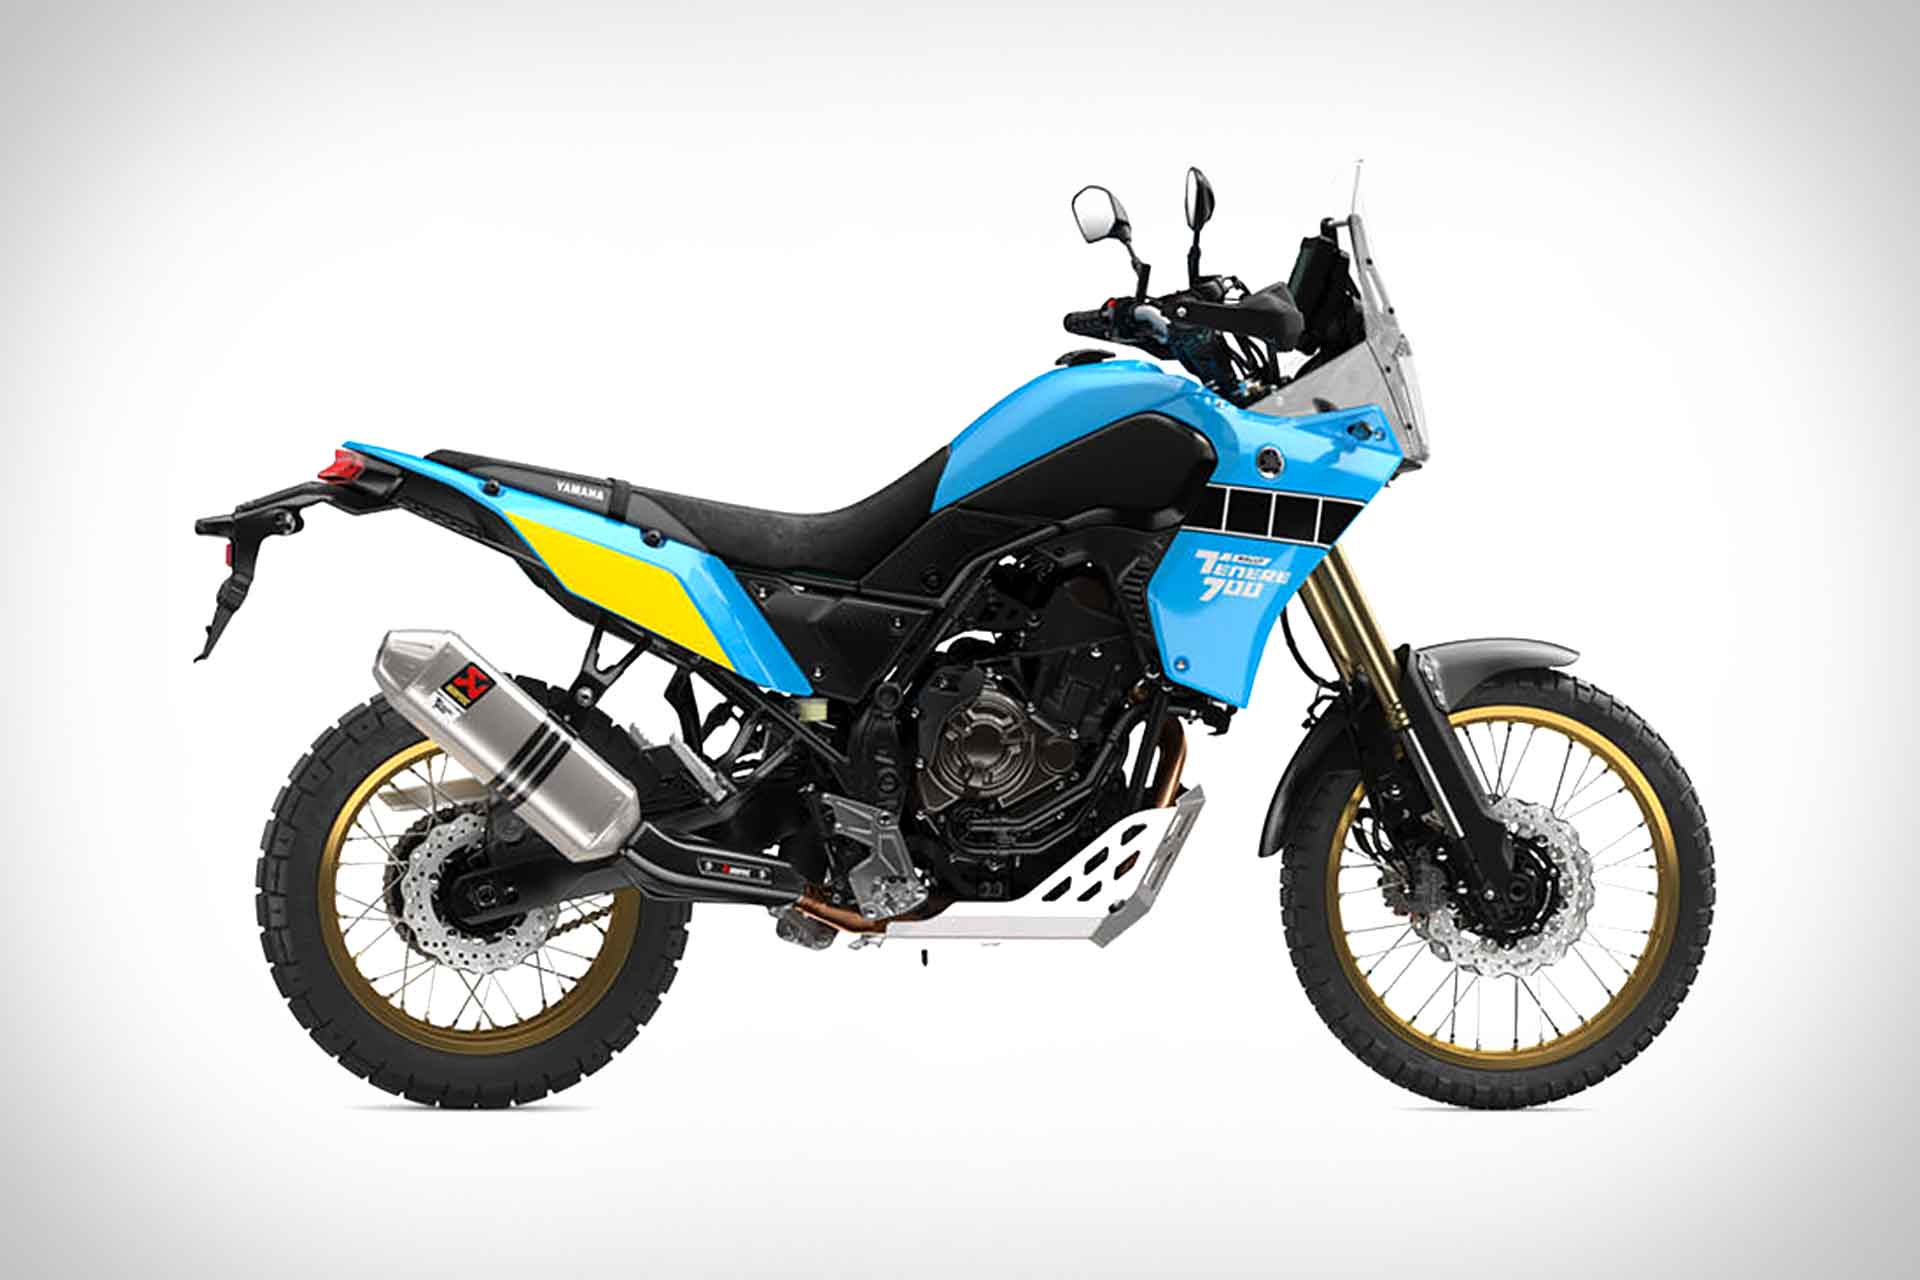 Ténéré 700 - Motorcycles - Yamaha Motor